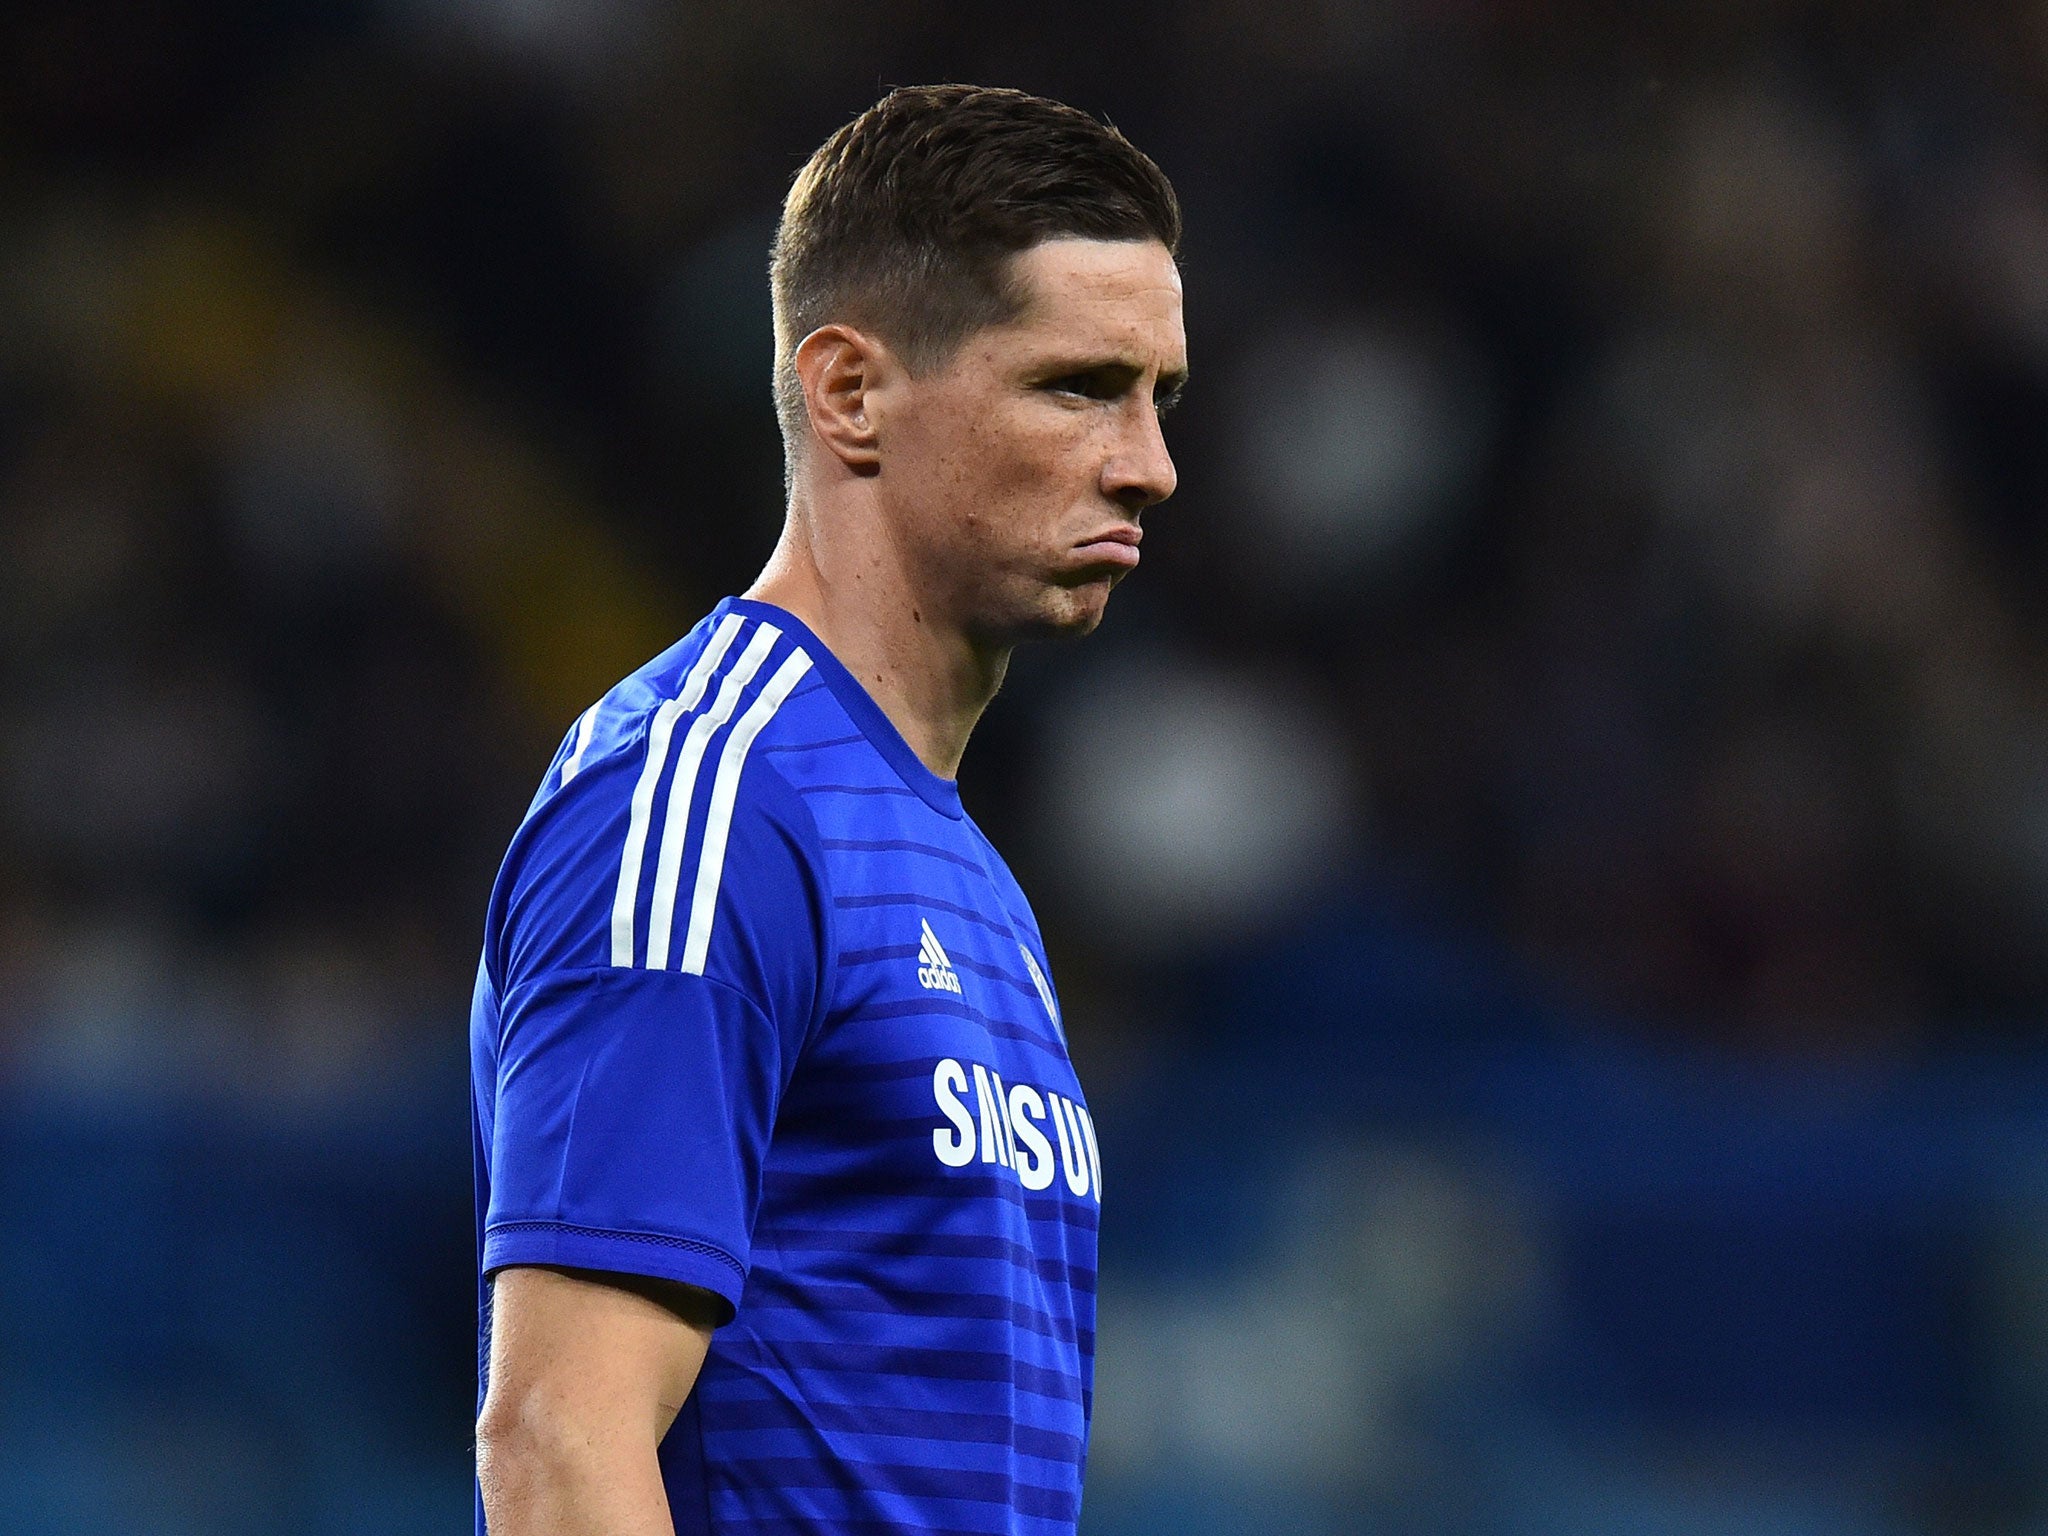 Fernando Torres has not scored in 266 minutes of pre-season for Chelsea